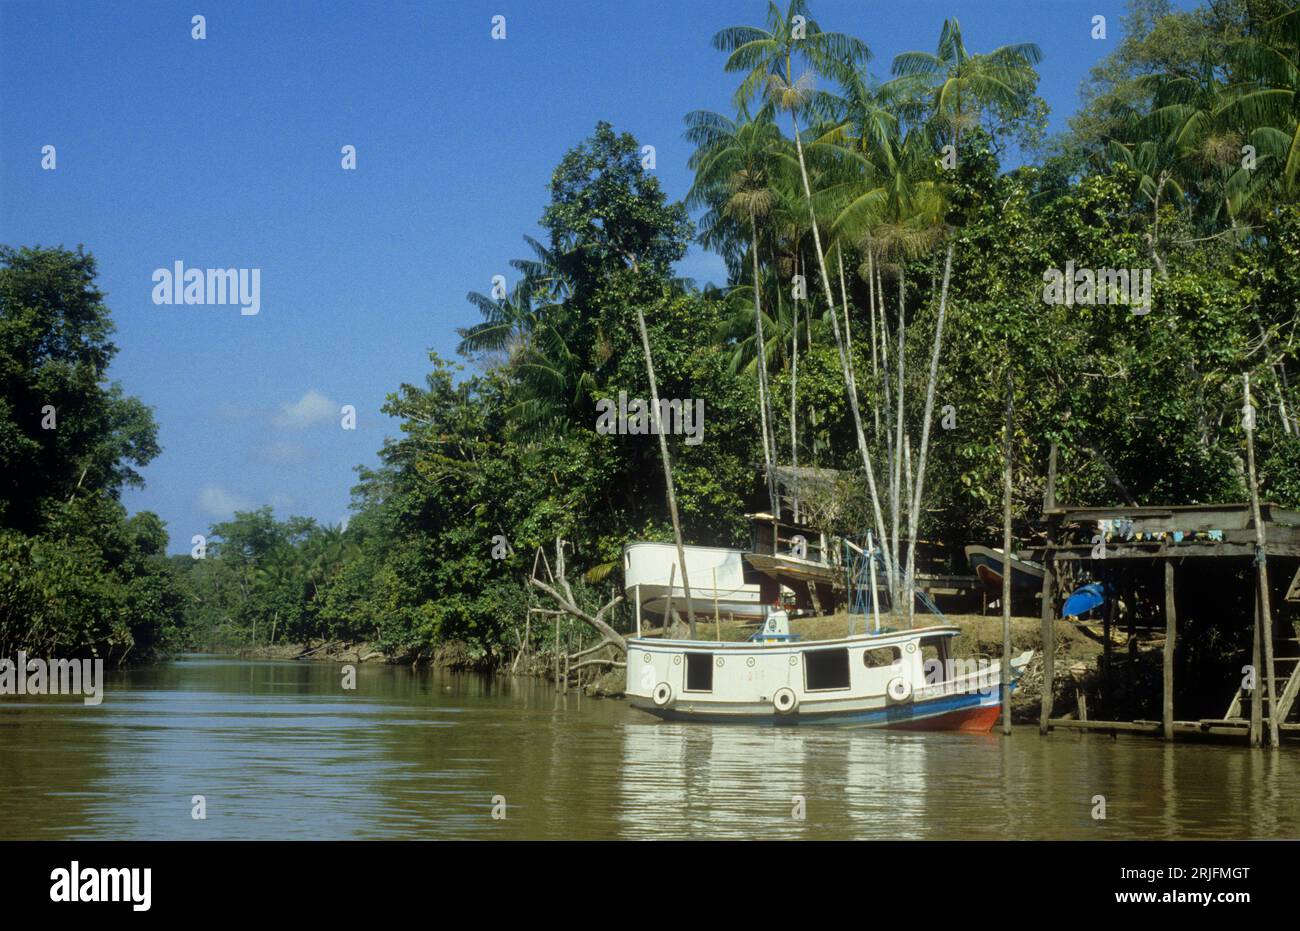 Brasilien, Amazonasregion, Bundesstaat Para. Rio Guama, mit Boot und drei Booten an Land. Palm is assai, Euterpe oleracea. Stockfoto